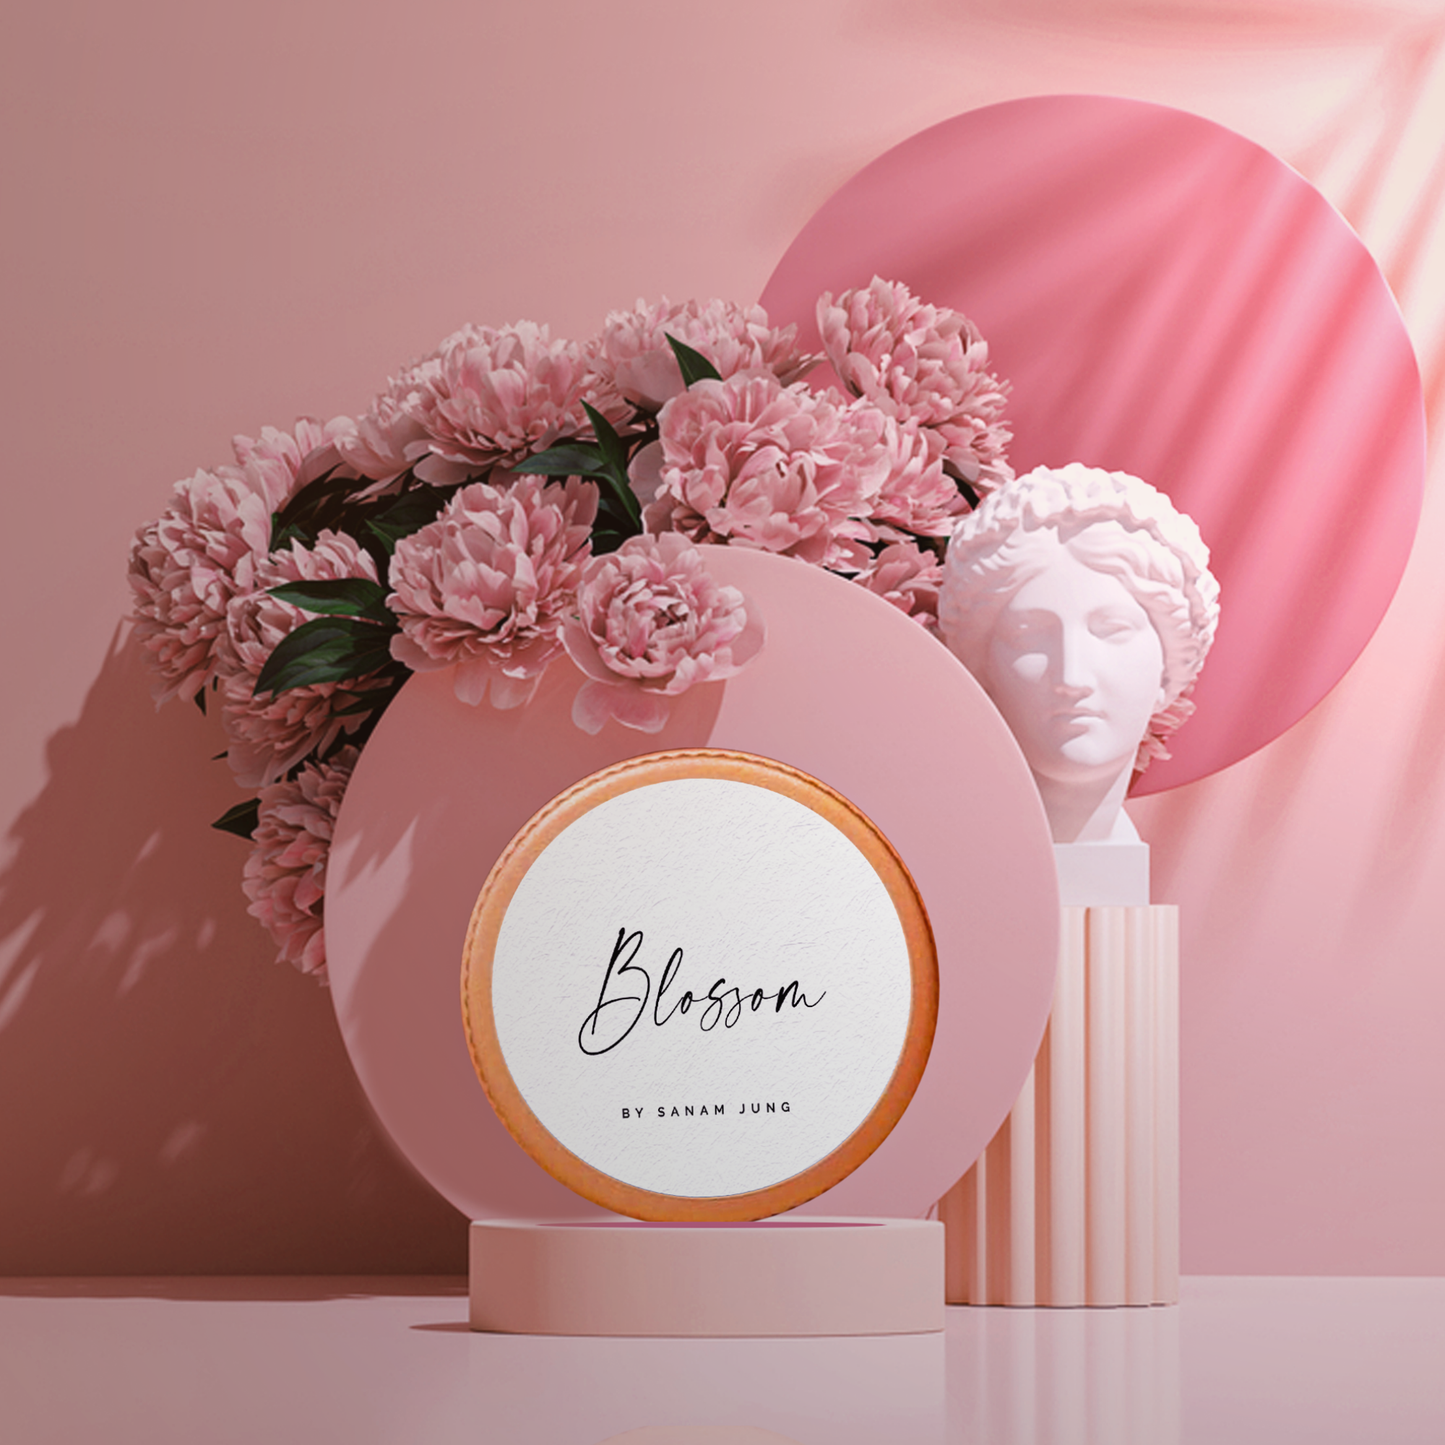 Blossom (Perfume Wax)